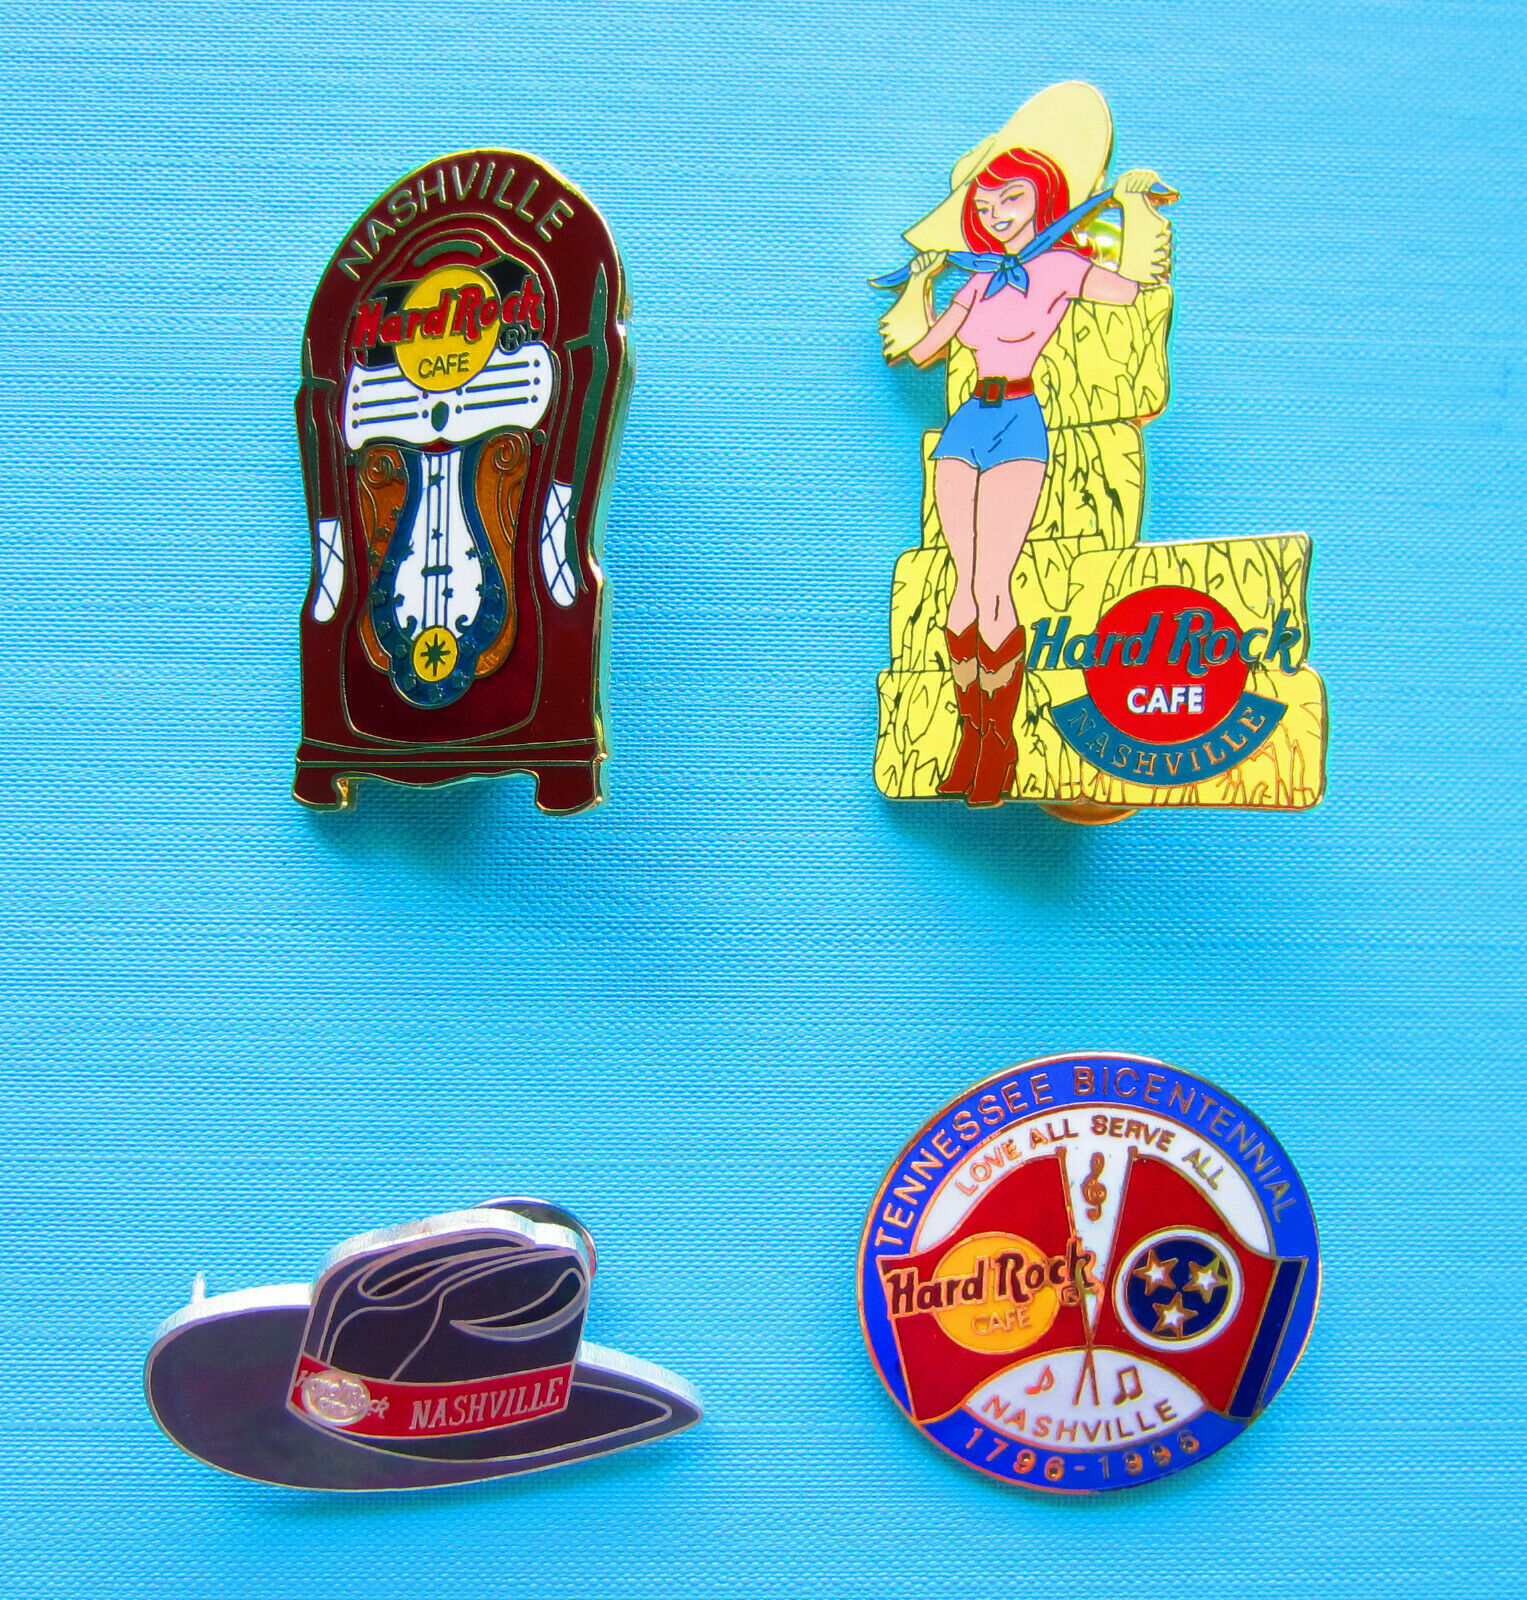 Hard Rock Cafe - (4) Different Nashville Pins (juke Box.hat.cowgirl.centennial)